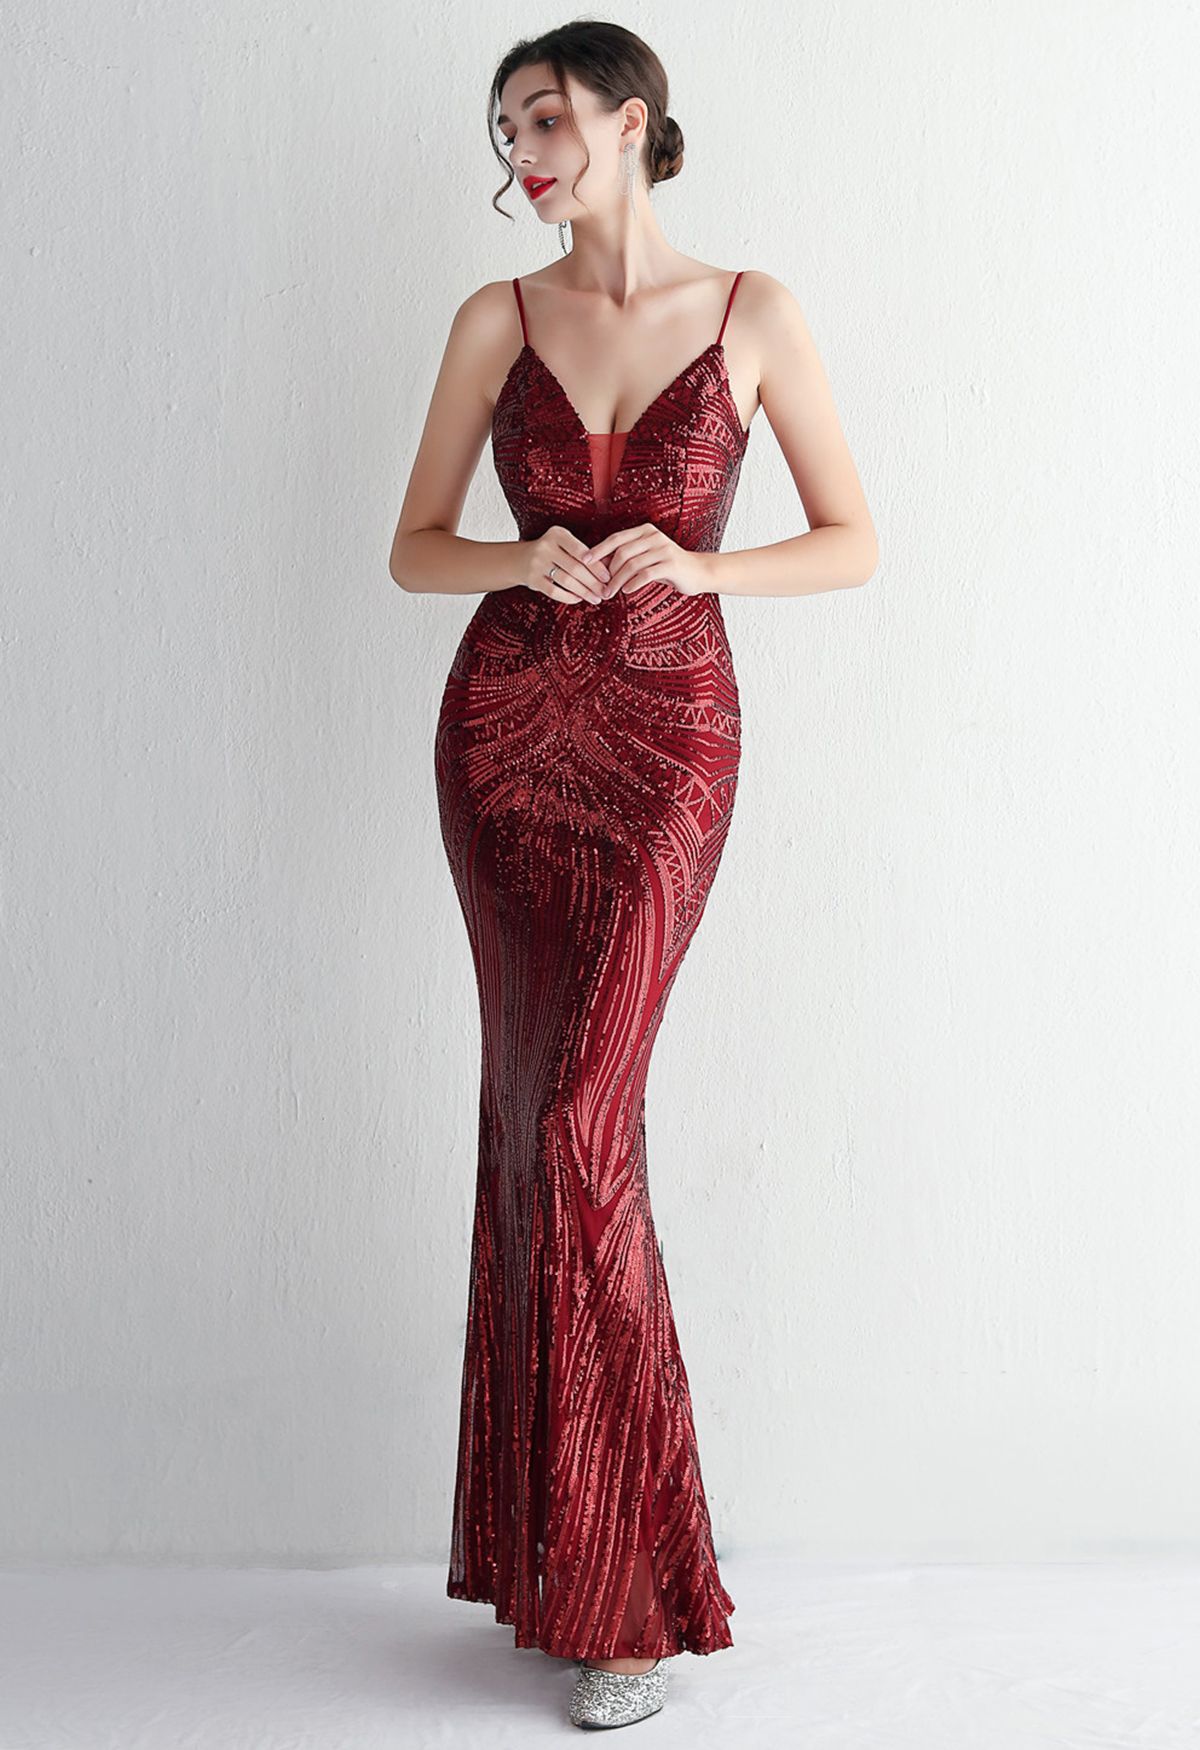 Glimmer Sequin Mermaid Cami Gown in Burgundy